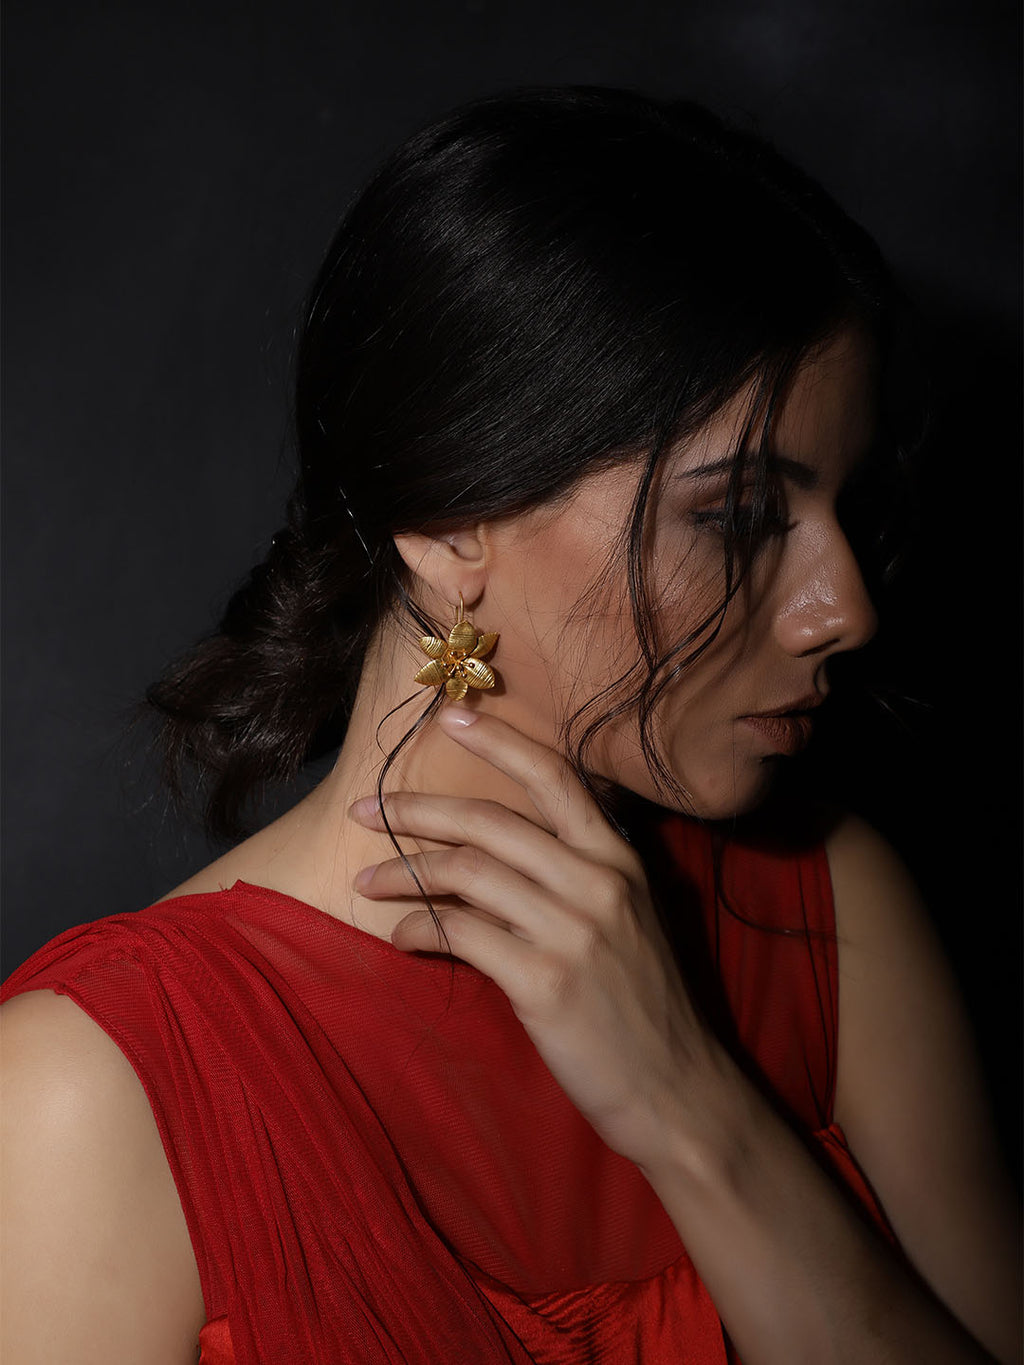 Gold Plated Lily Loops, Earrings - Shopberserk